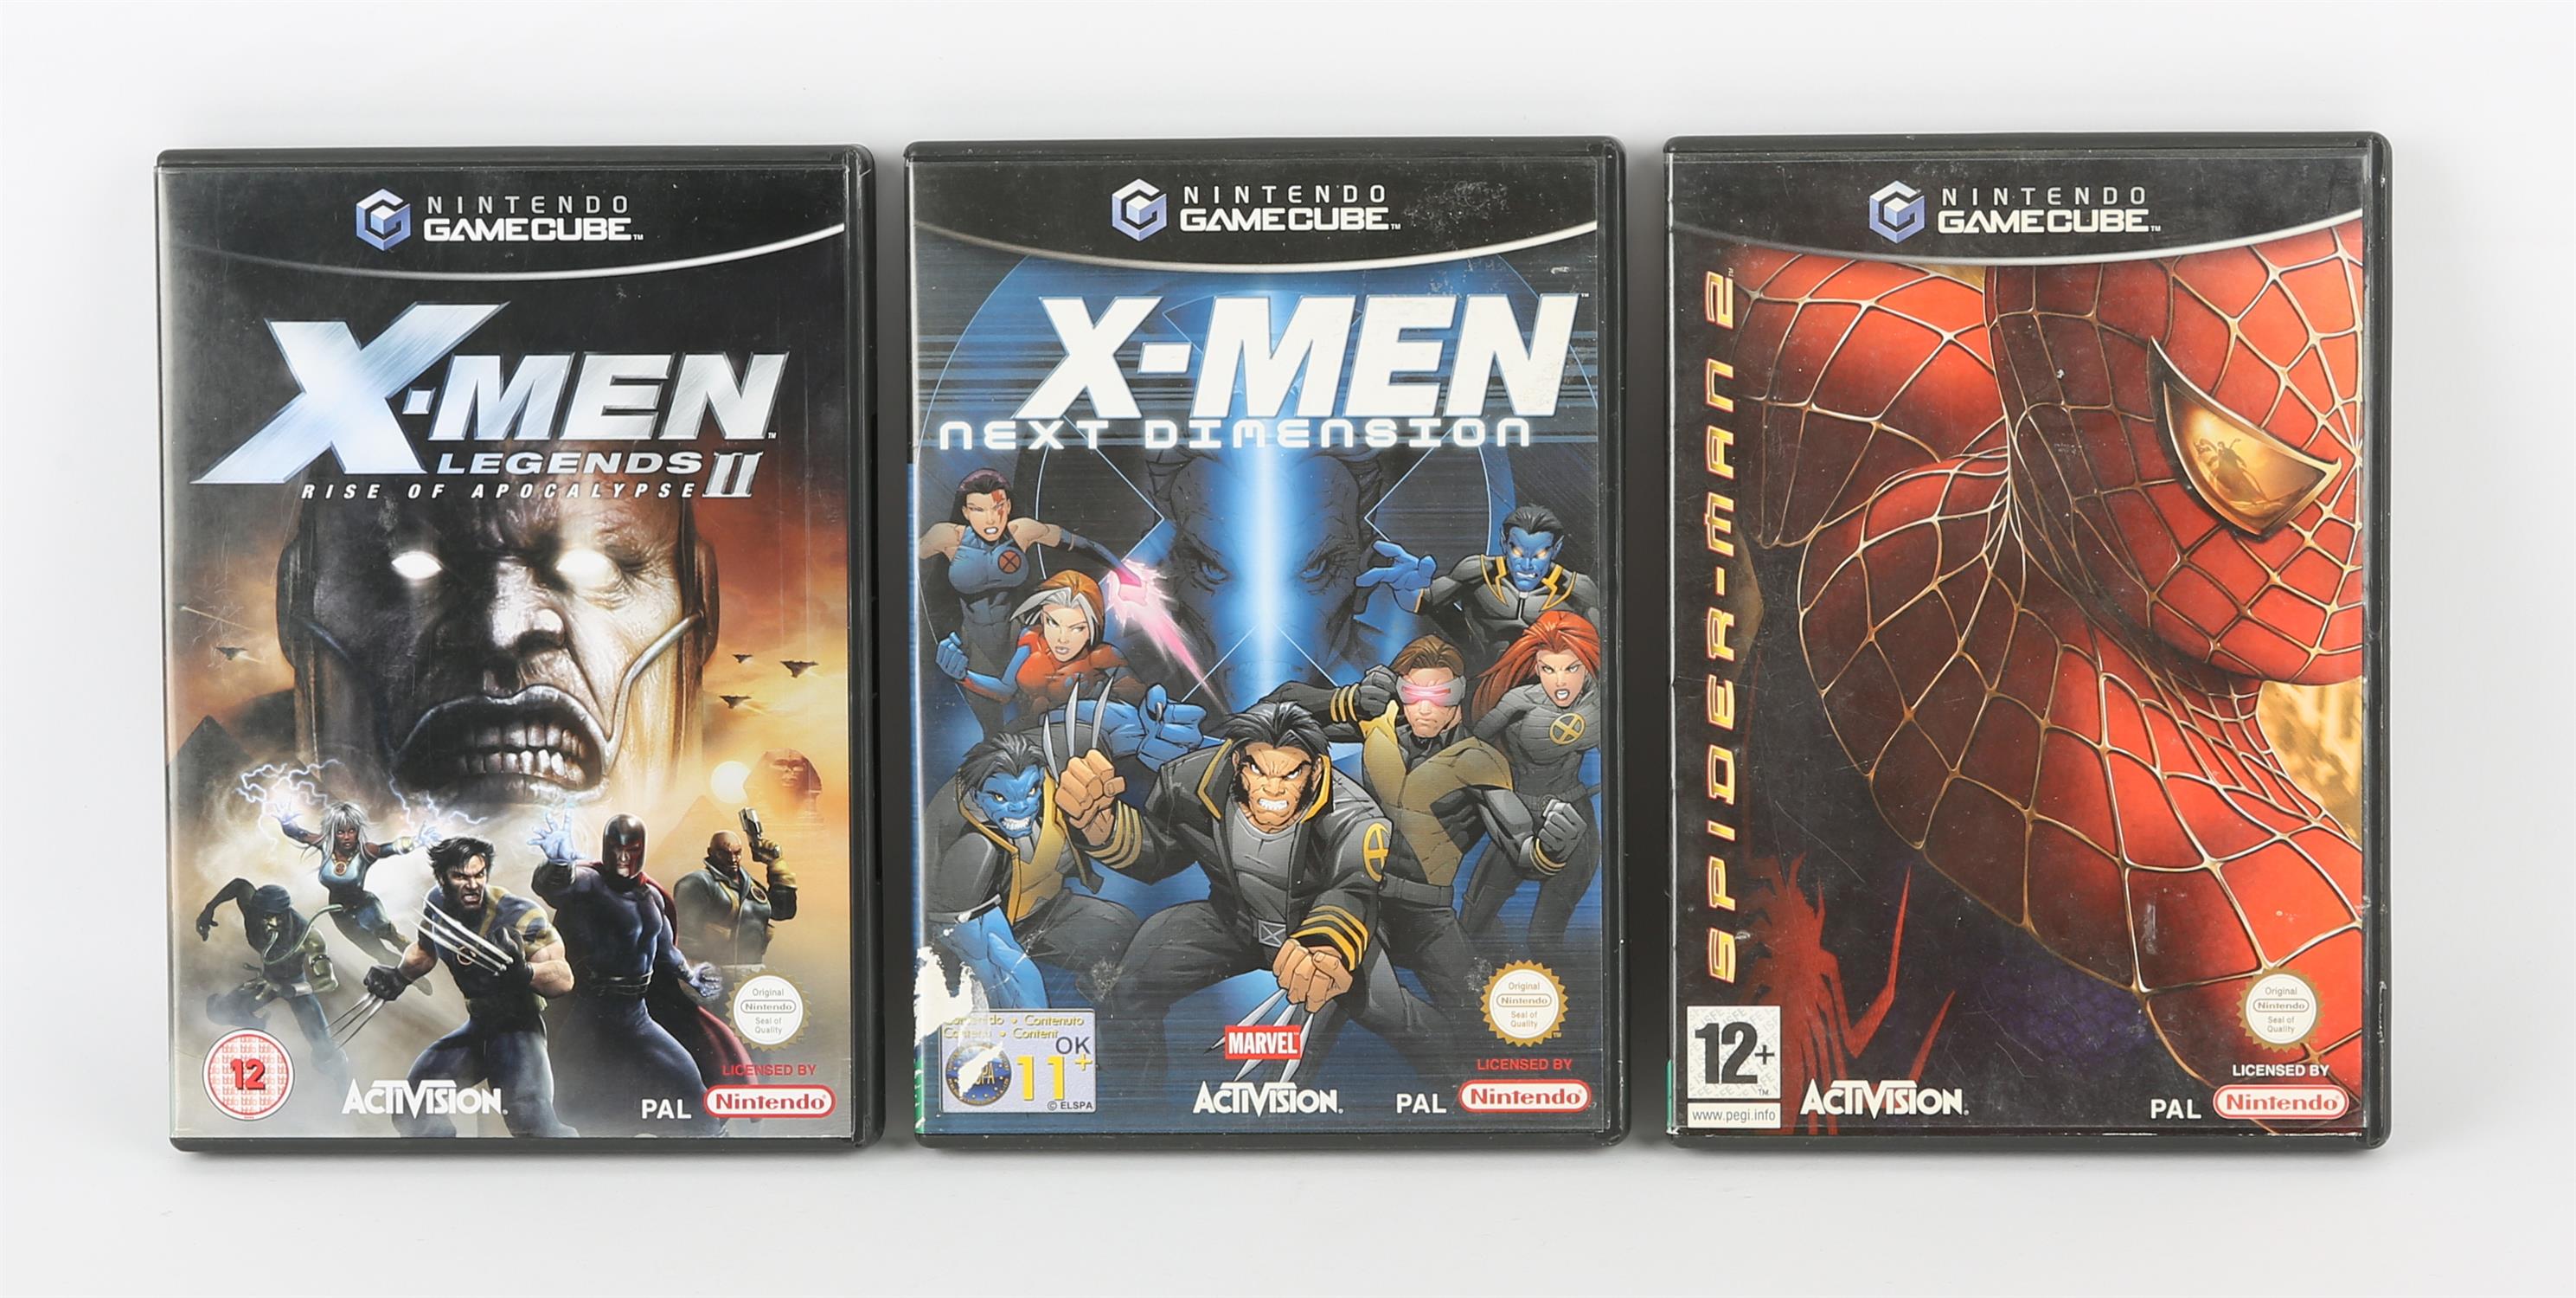 Nintendo GameCube Marvel bundle (PAL) Games include: Spider-Man 2, X-Men Next Dimension and X-Men